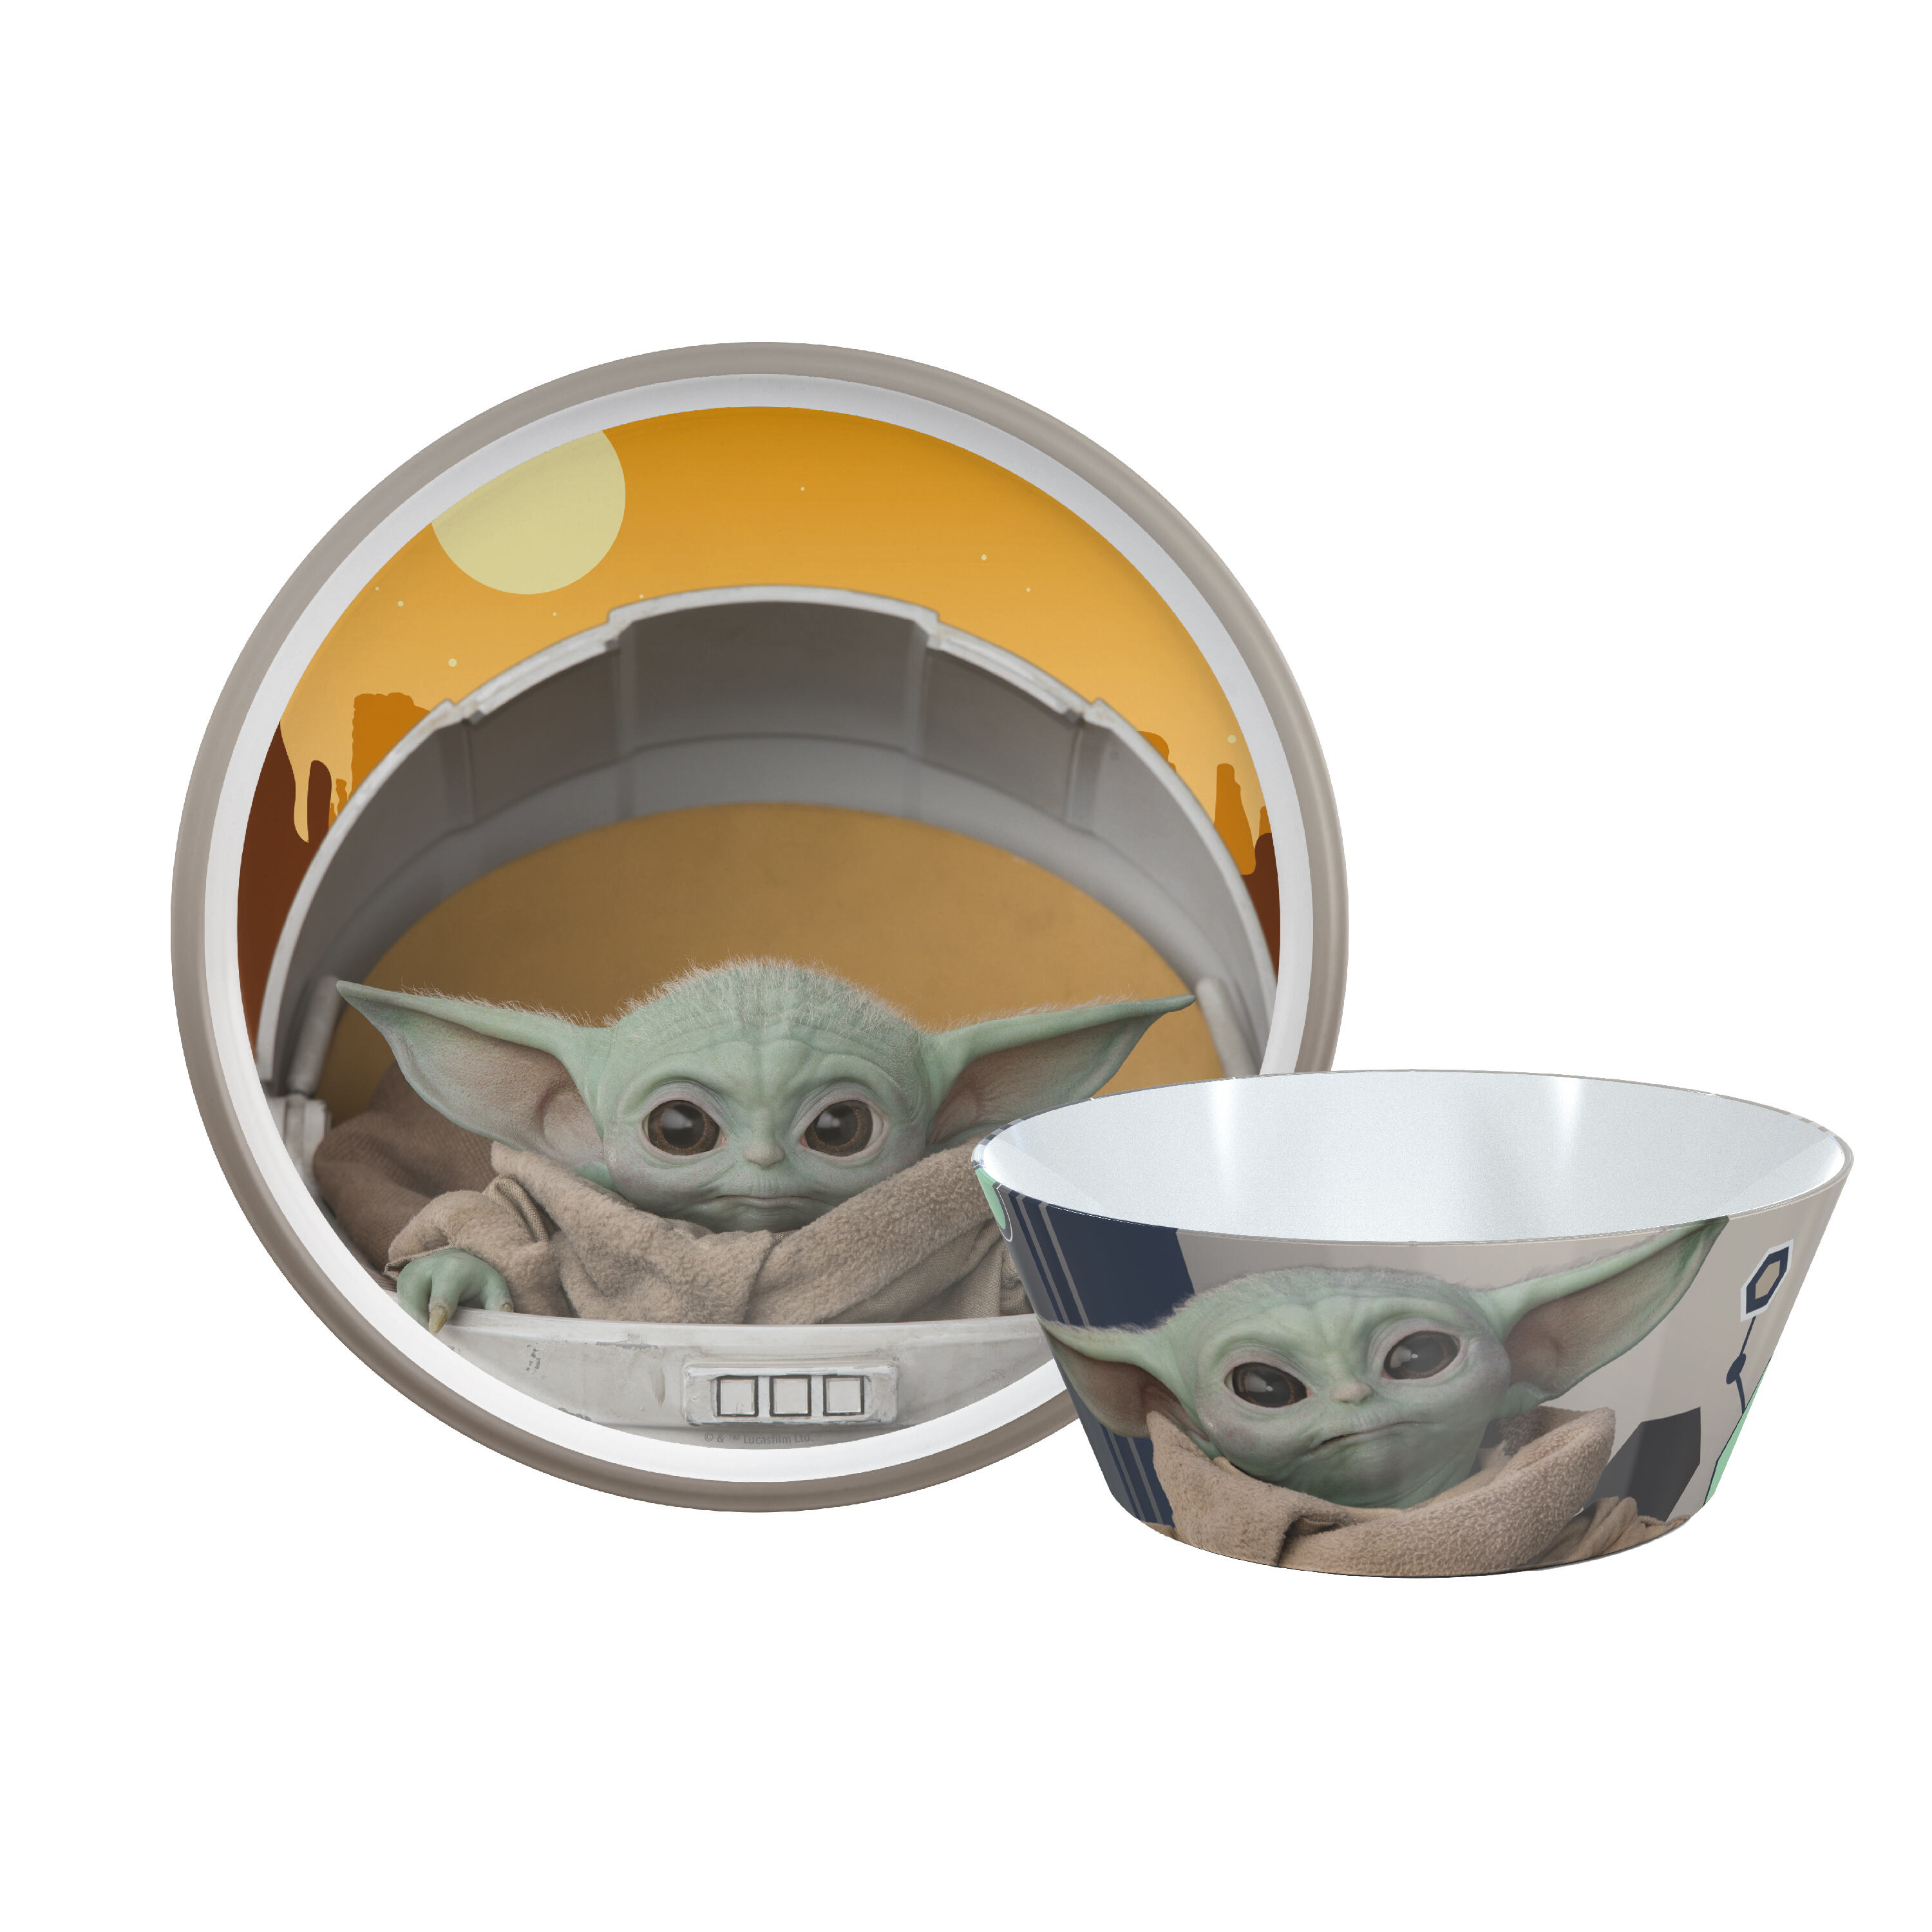 Disney Star Wars The Force Awakens 3 Pc Dinnerware Set Plate Cup Bowl BPA free 